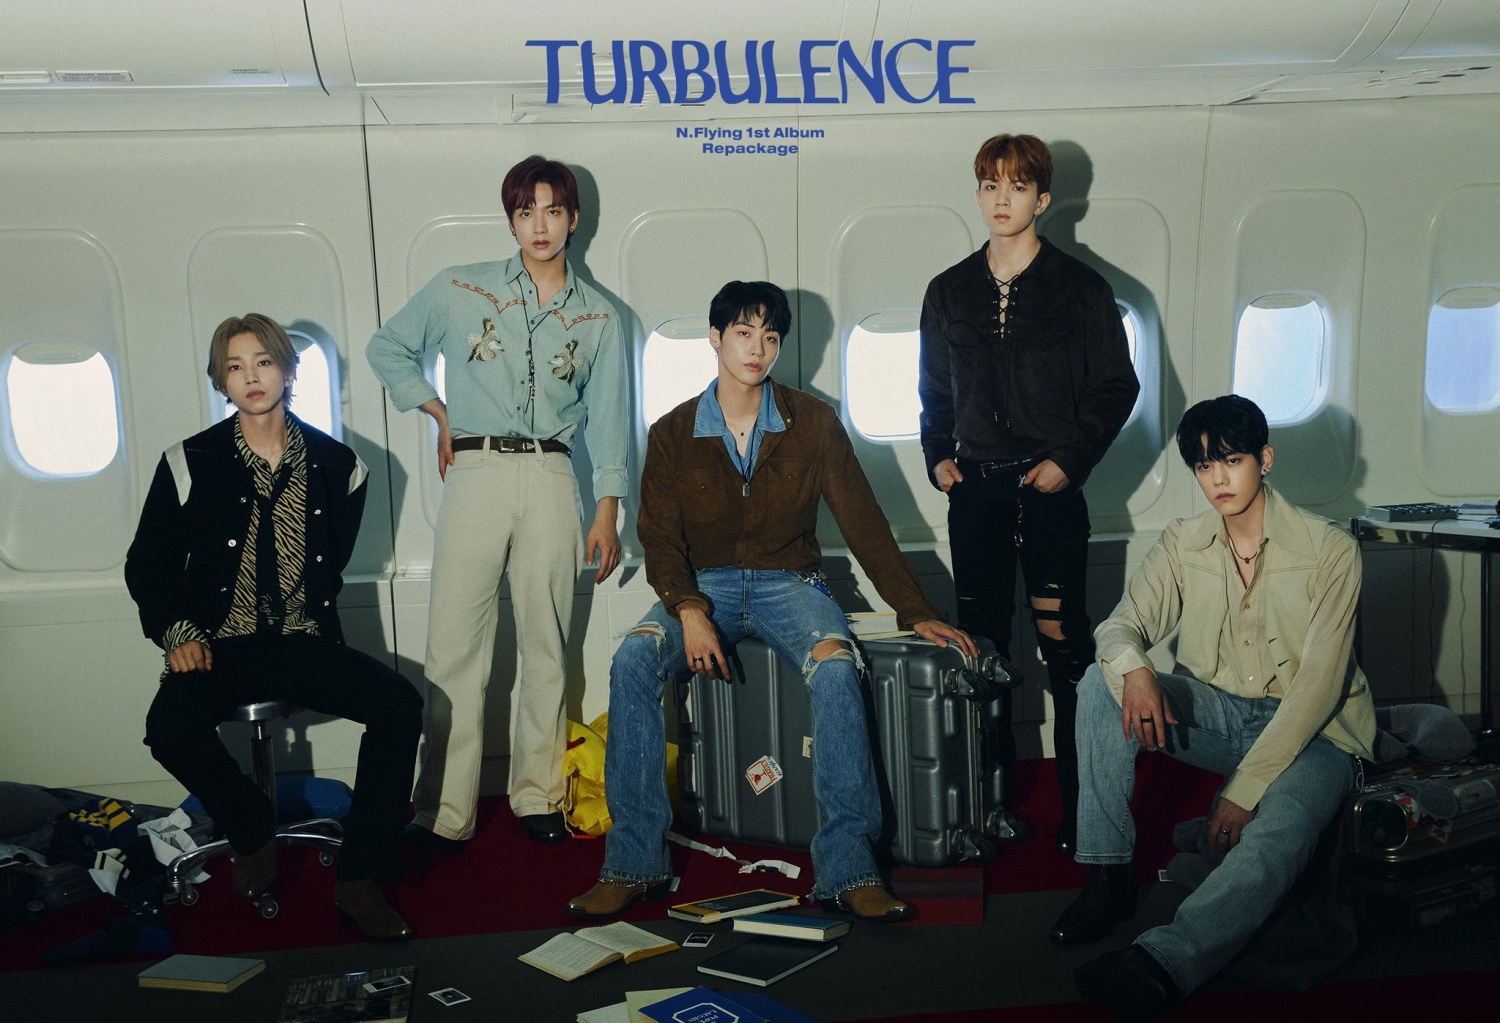 N.Flying unveils 'TURBULENCE' jacket... confused mood